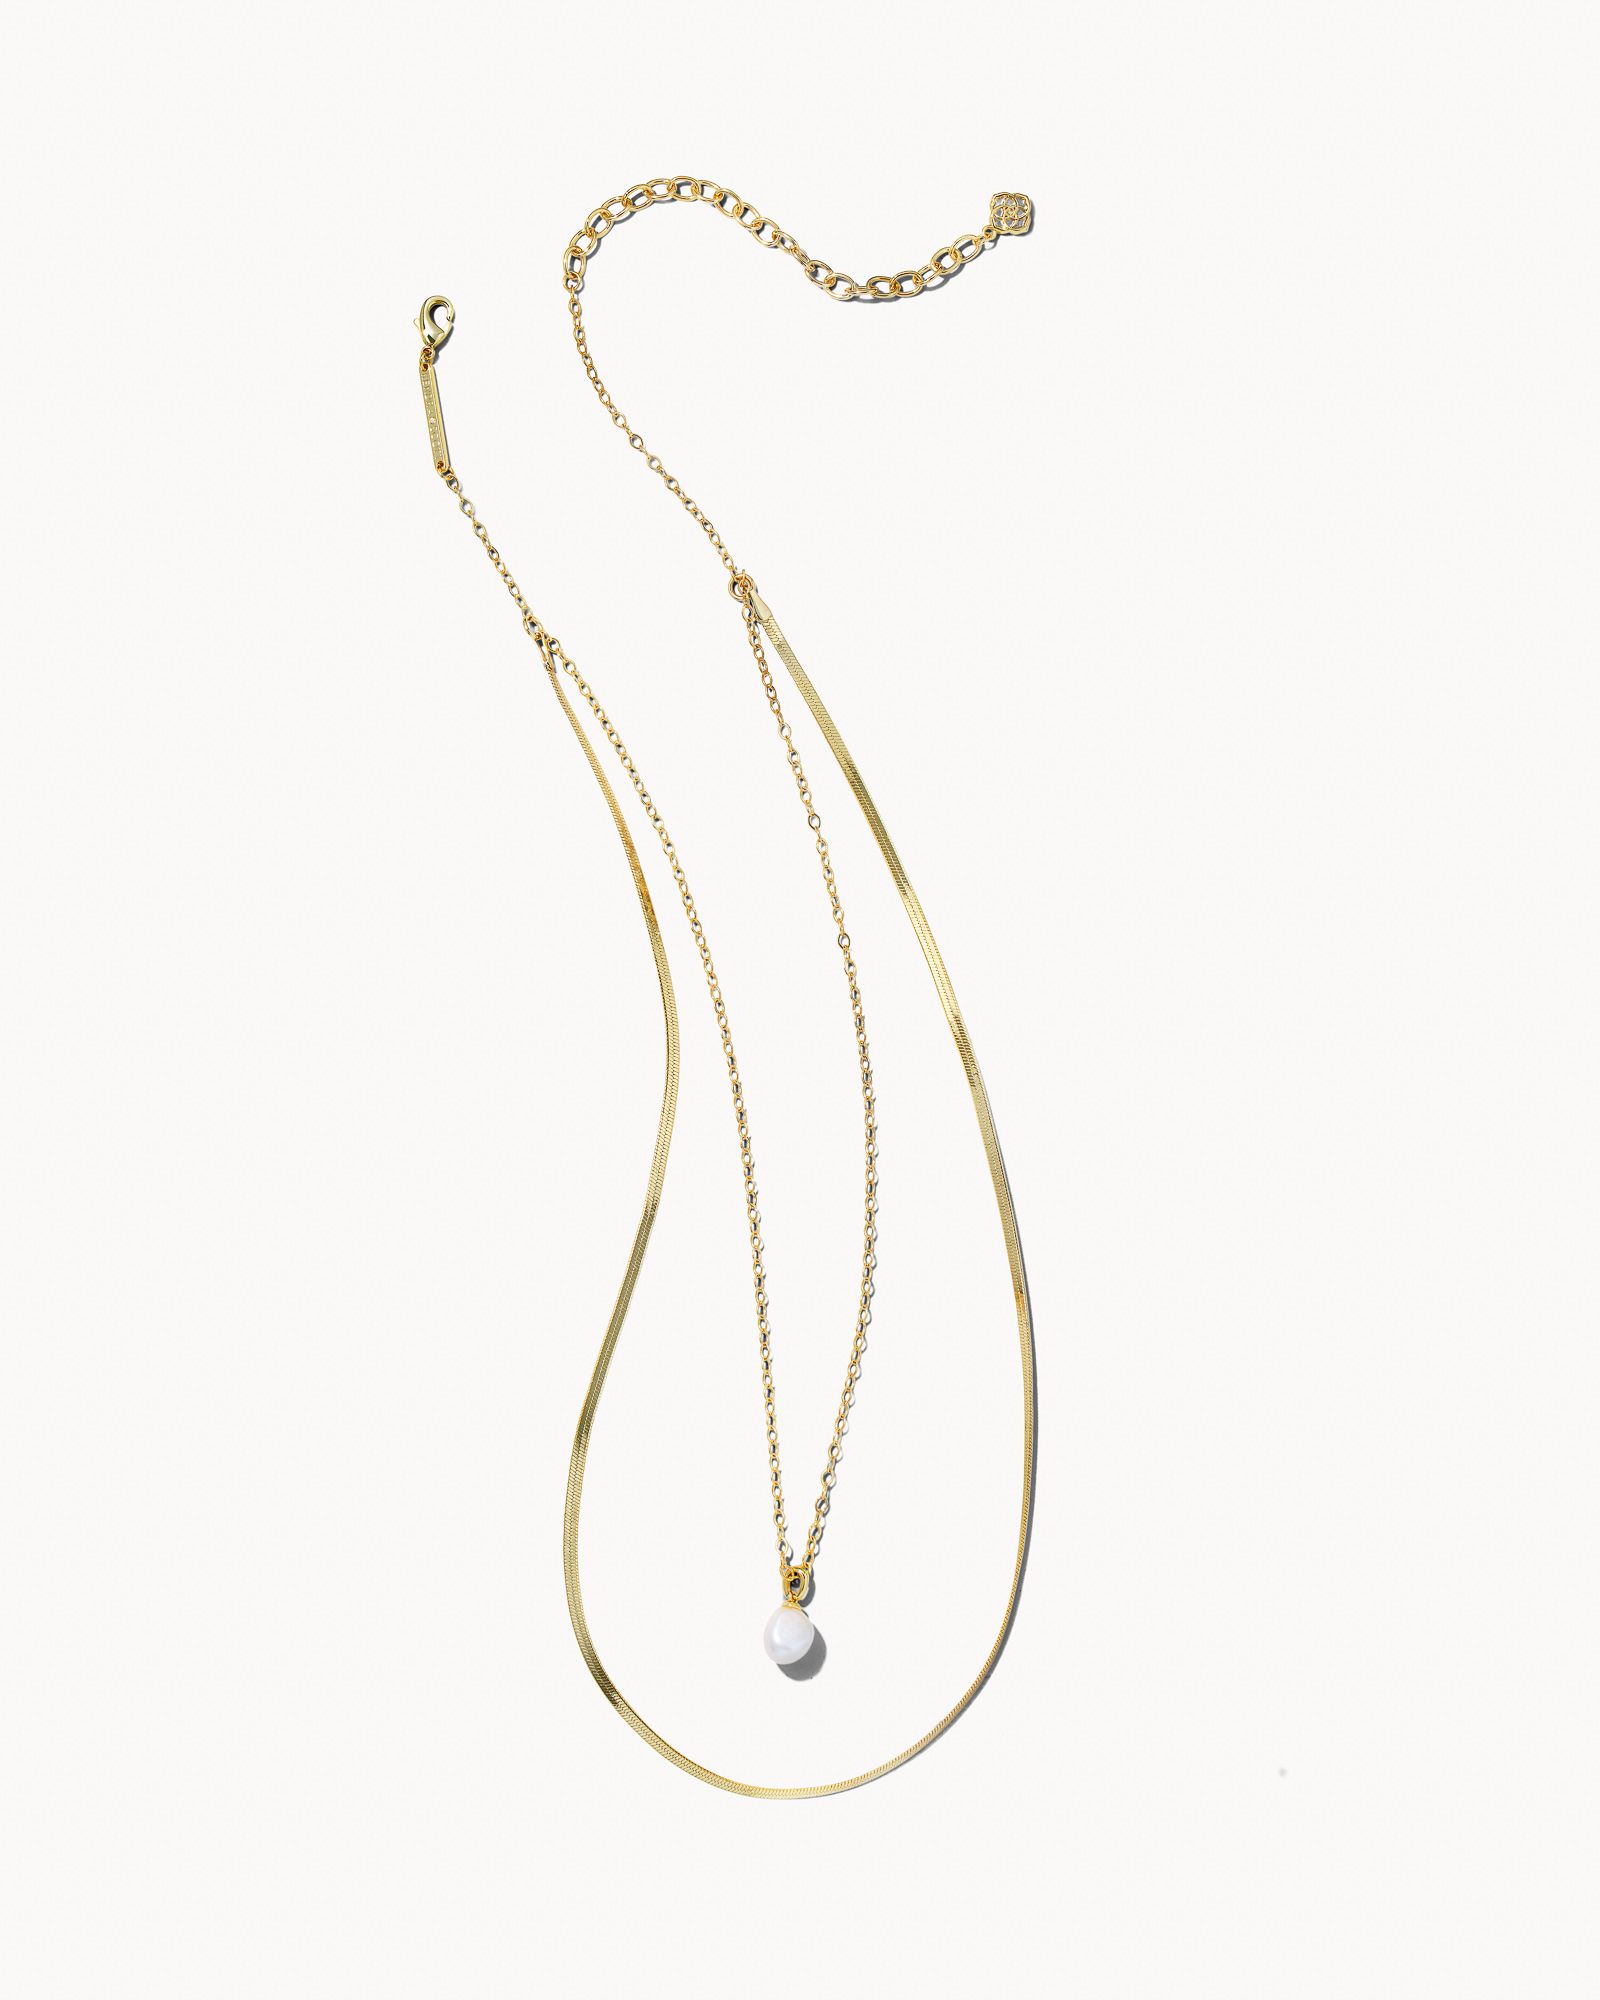 Lindsay Gold Multi Strand Necklace in White Pearl | Kendra Scott | Kendra Scott